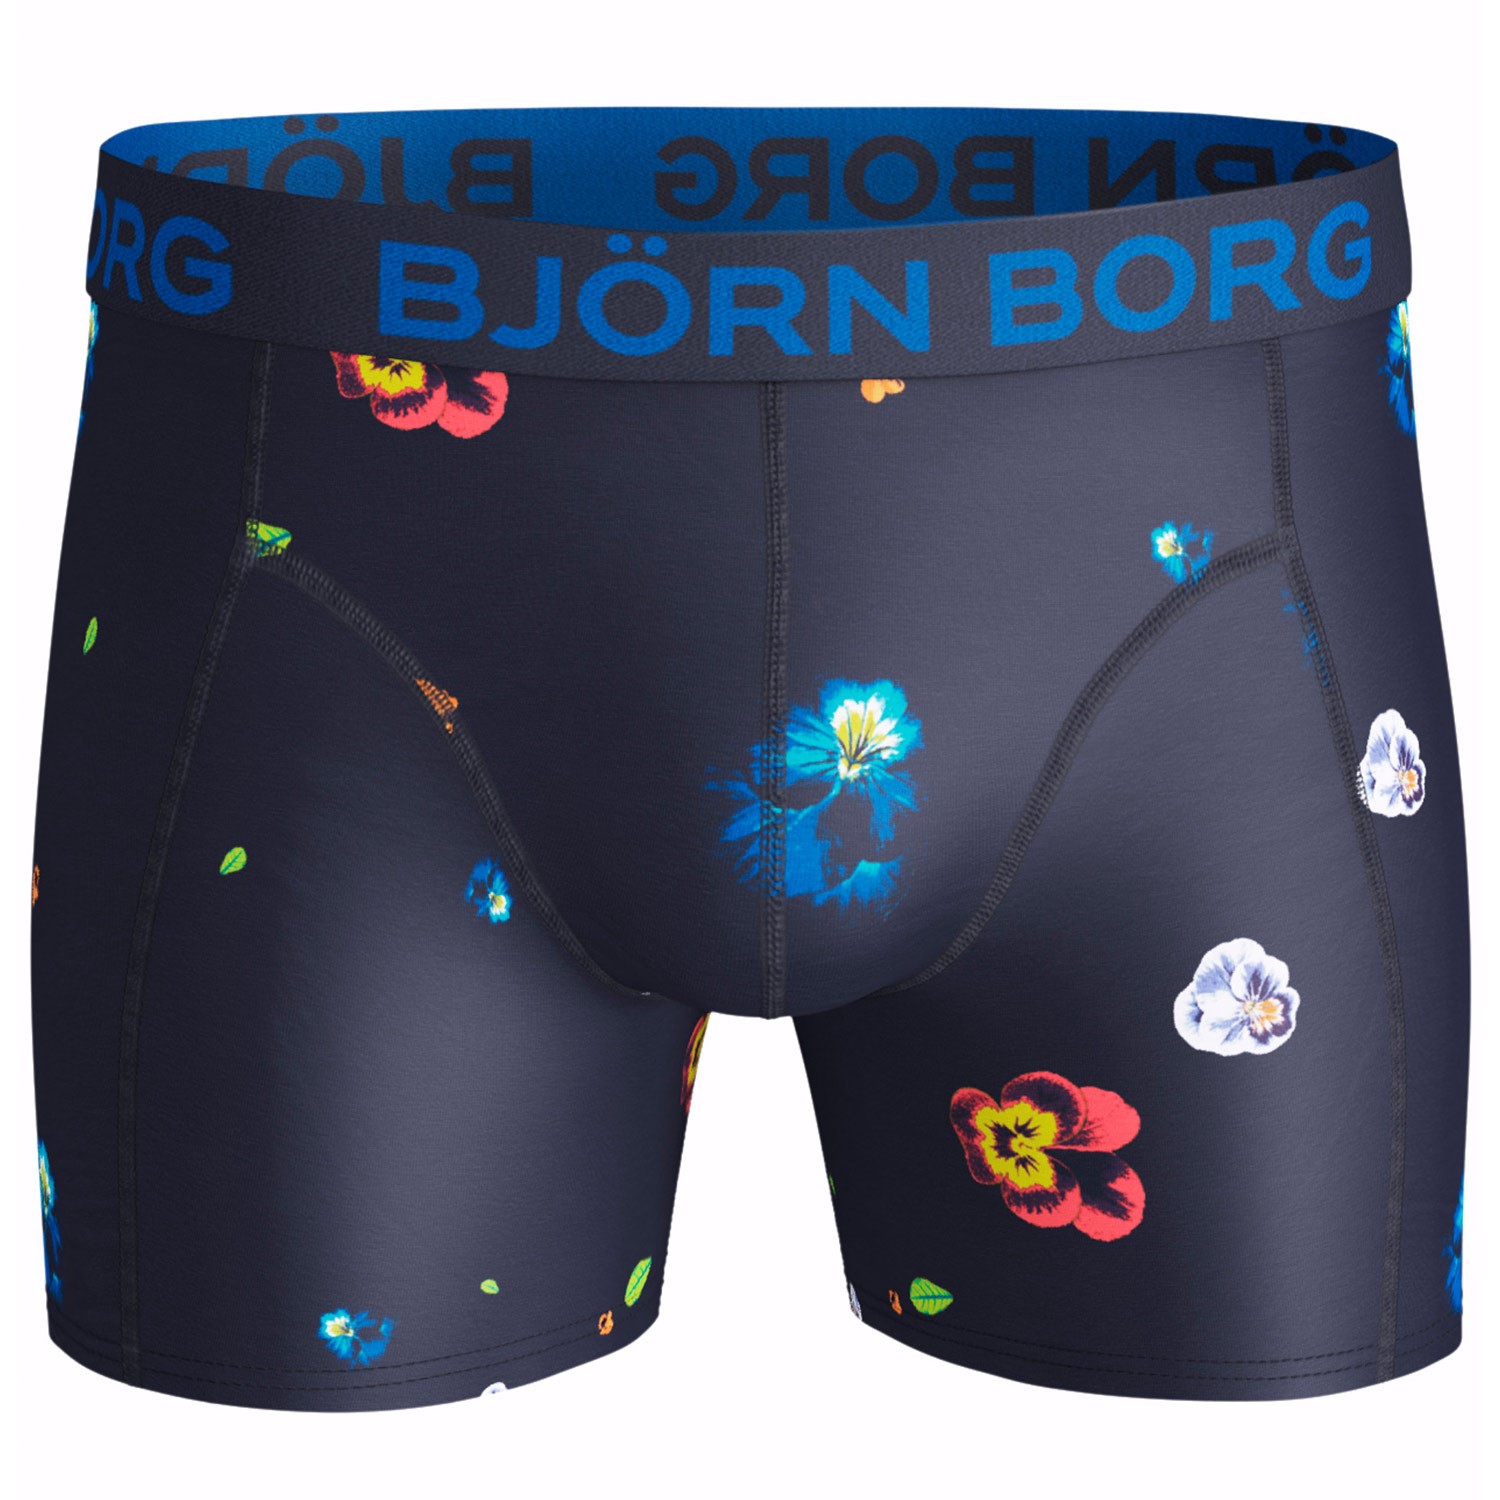 Björn Borg Microfiber Shorts Pencee